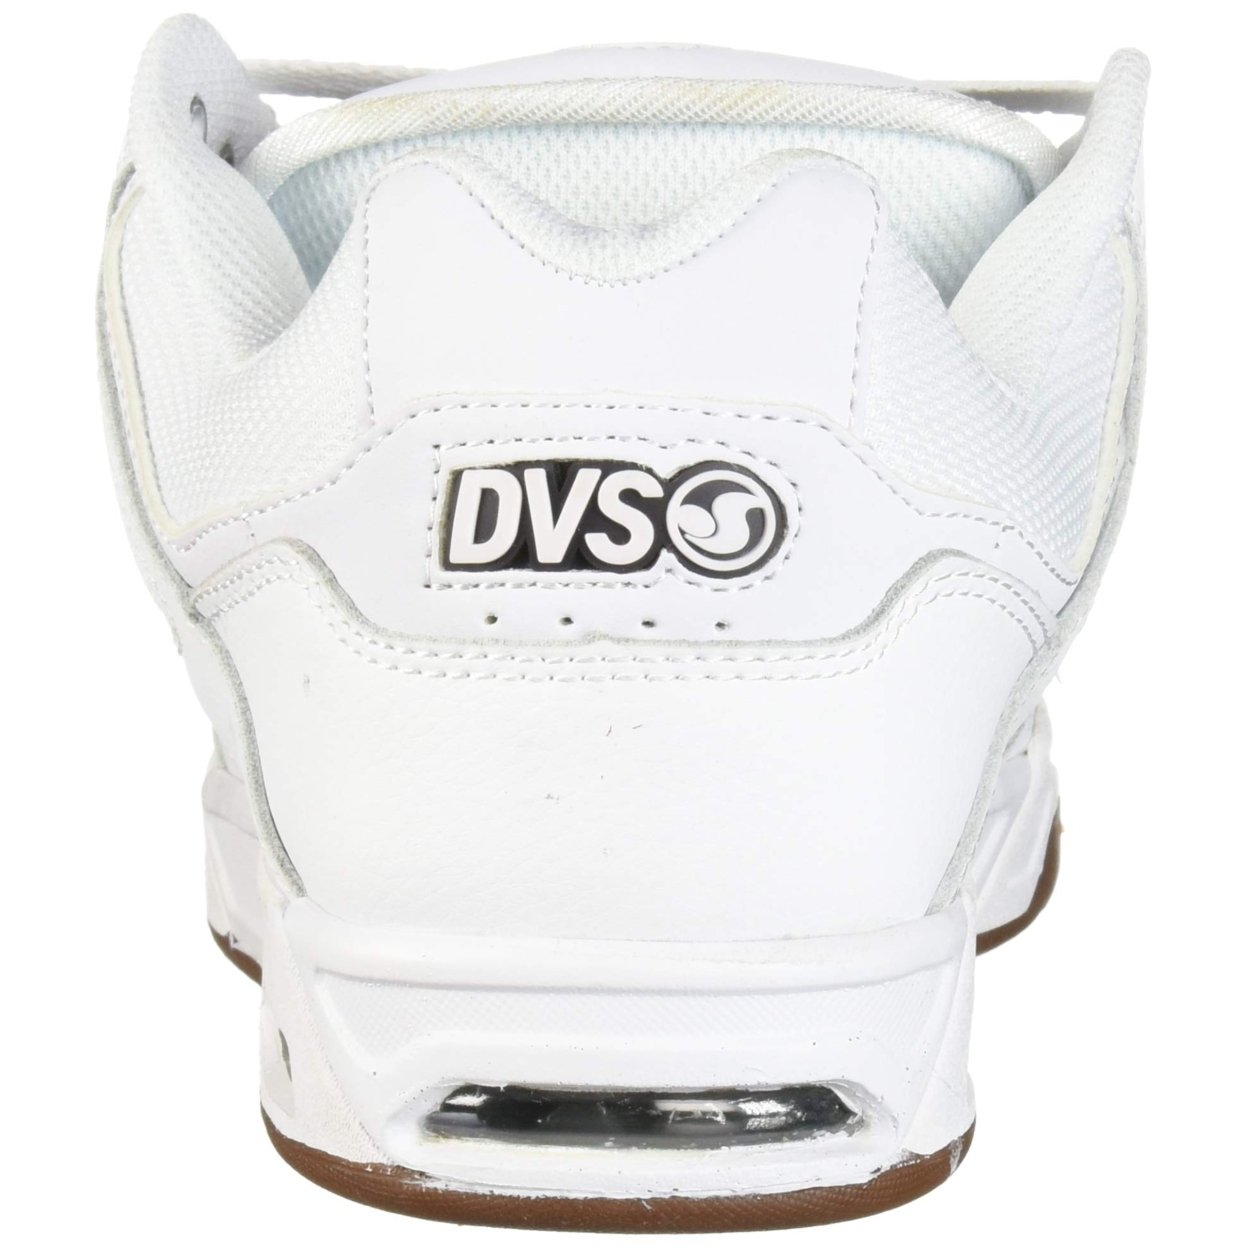 Dvs Footwear Mens Men's Enduro HEIR Skate Shoe WHITE GUM NUBUCK - WHITE GUM NUBUCK, 9-M